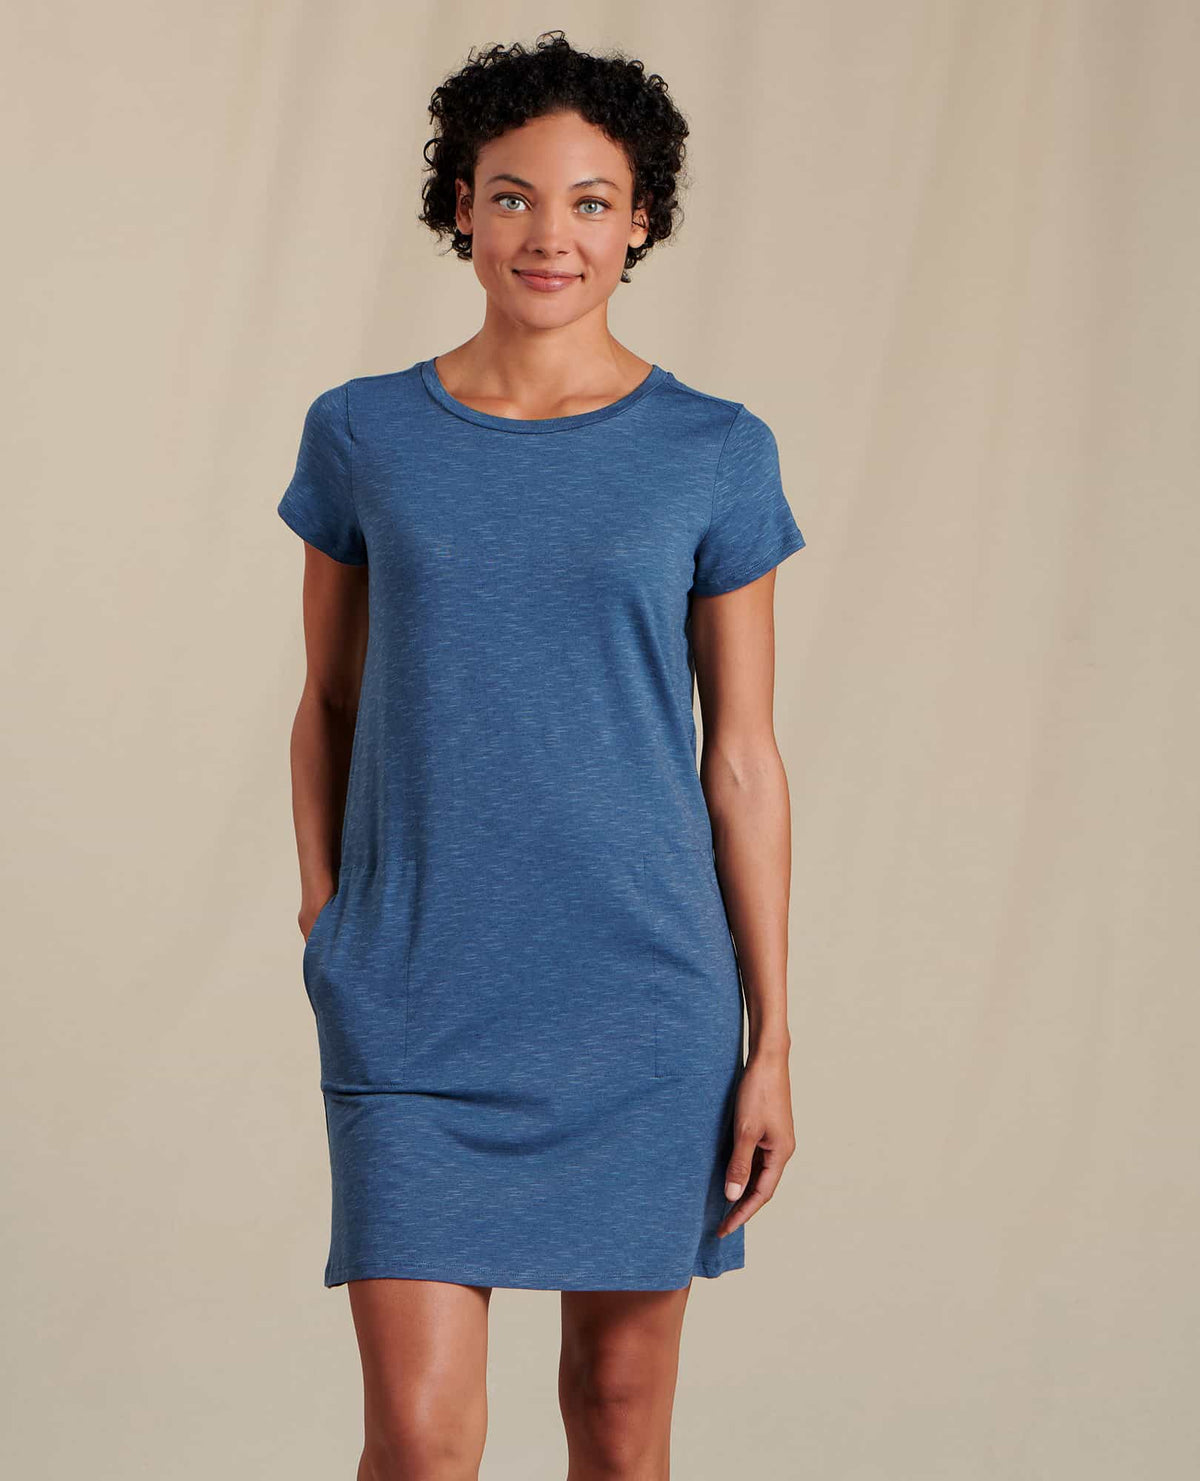 Windmere II Short Sleeve Dress - SALE